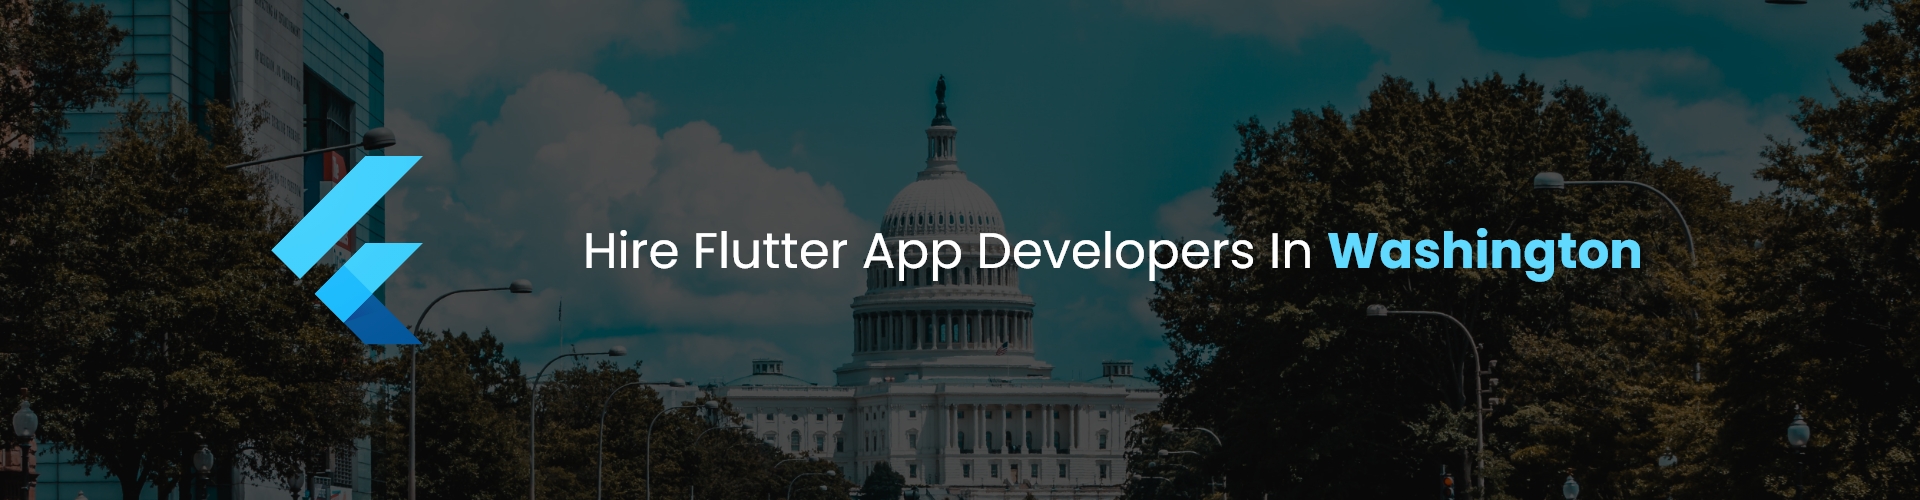 hire flutter app developers washington